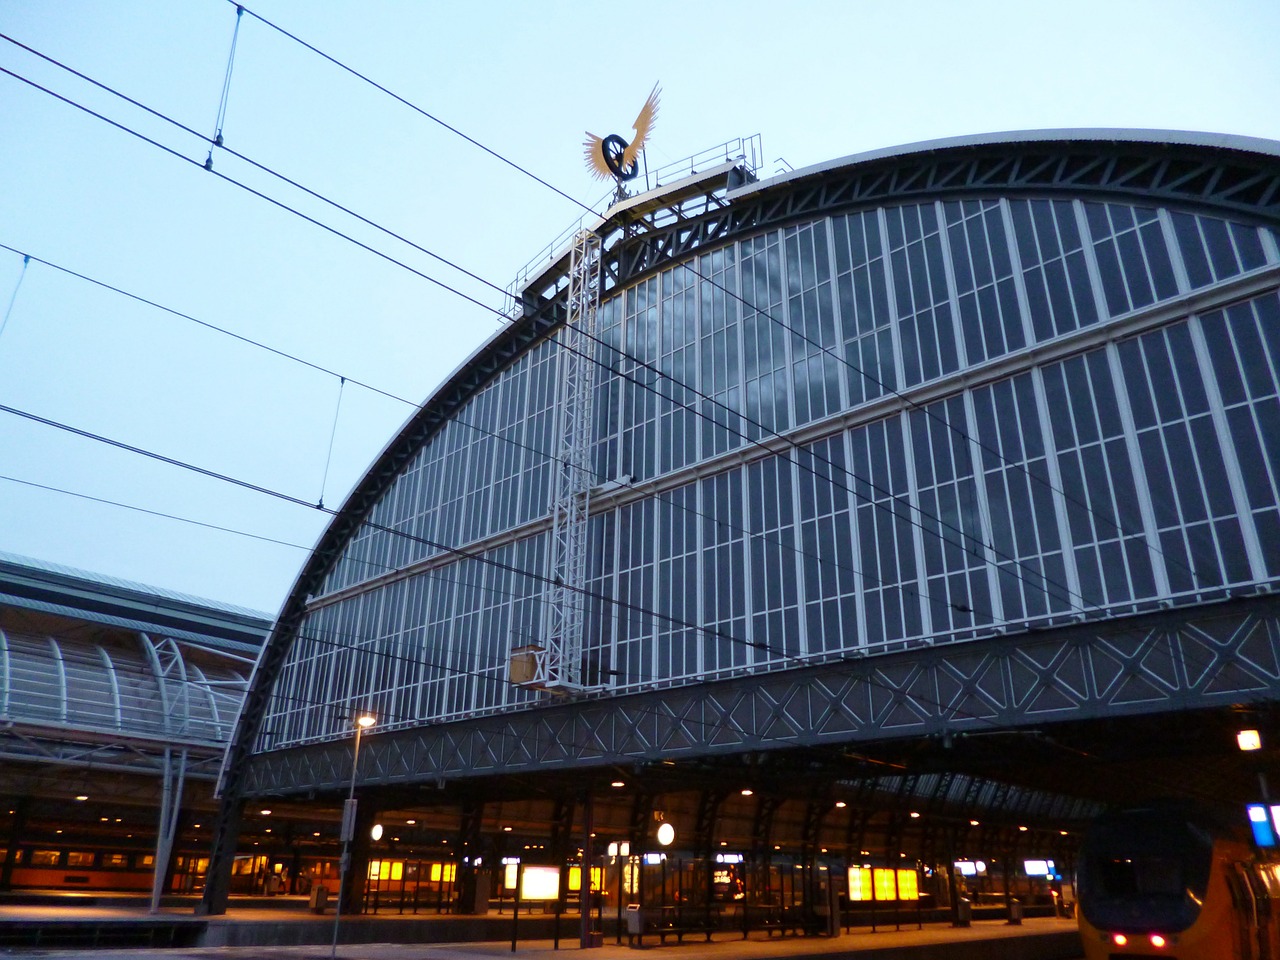 railway station architecture amsterdam free photo